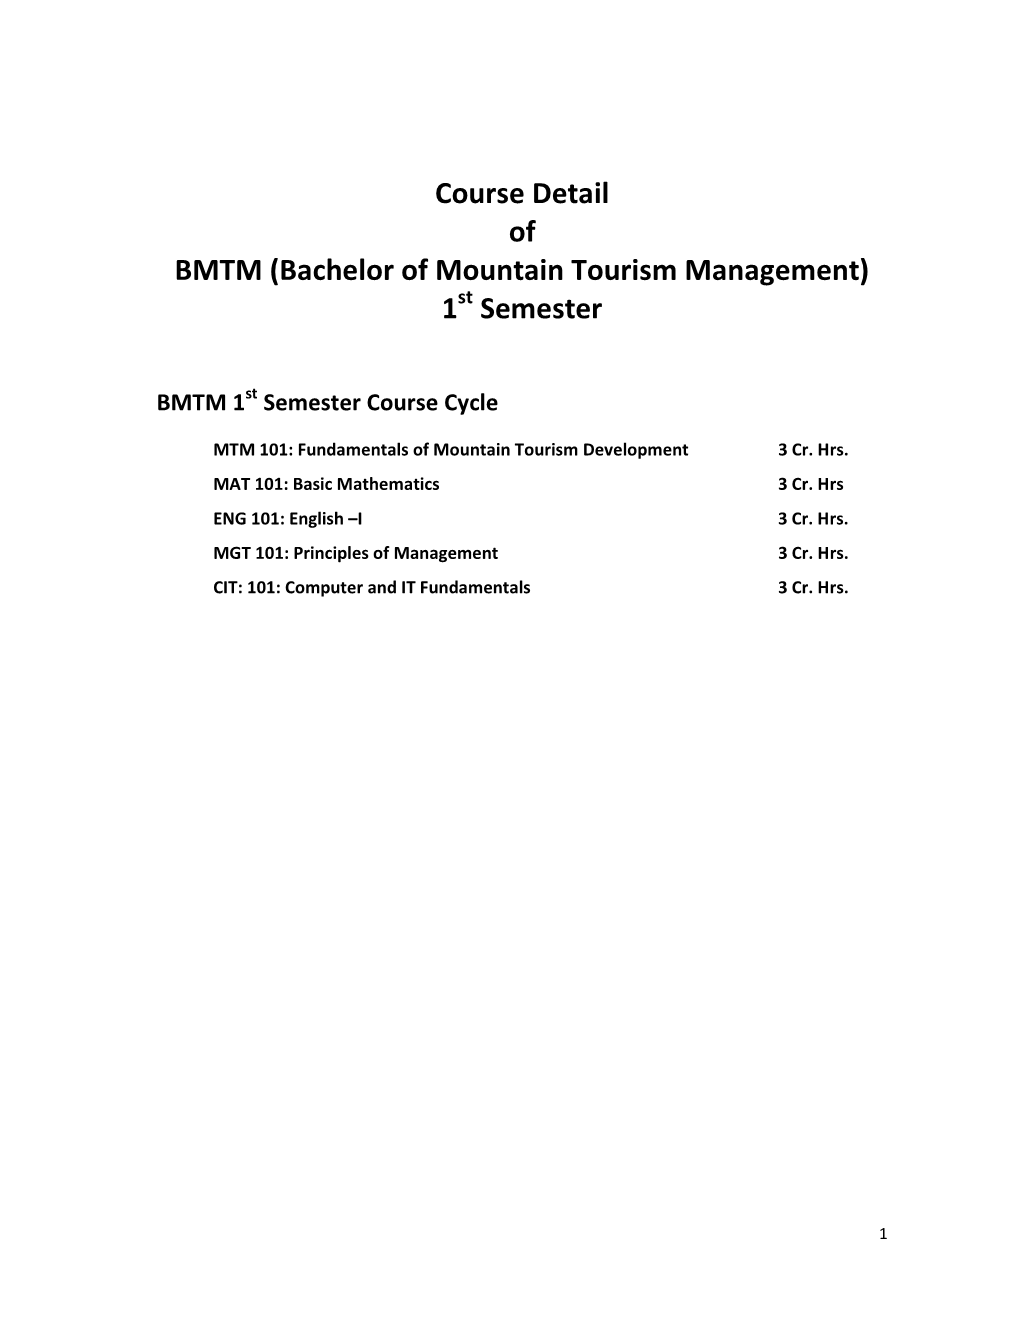 Course Detail of BMTM (Bachelor of Mountain Tourism Management) 1St Semester